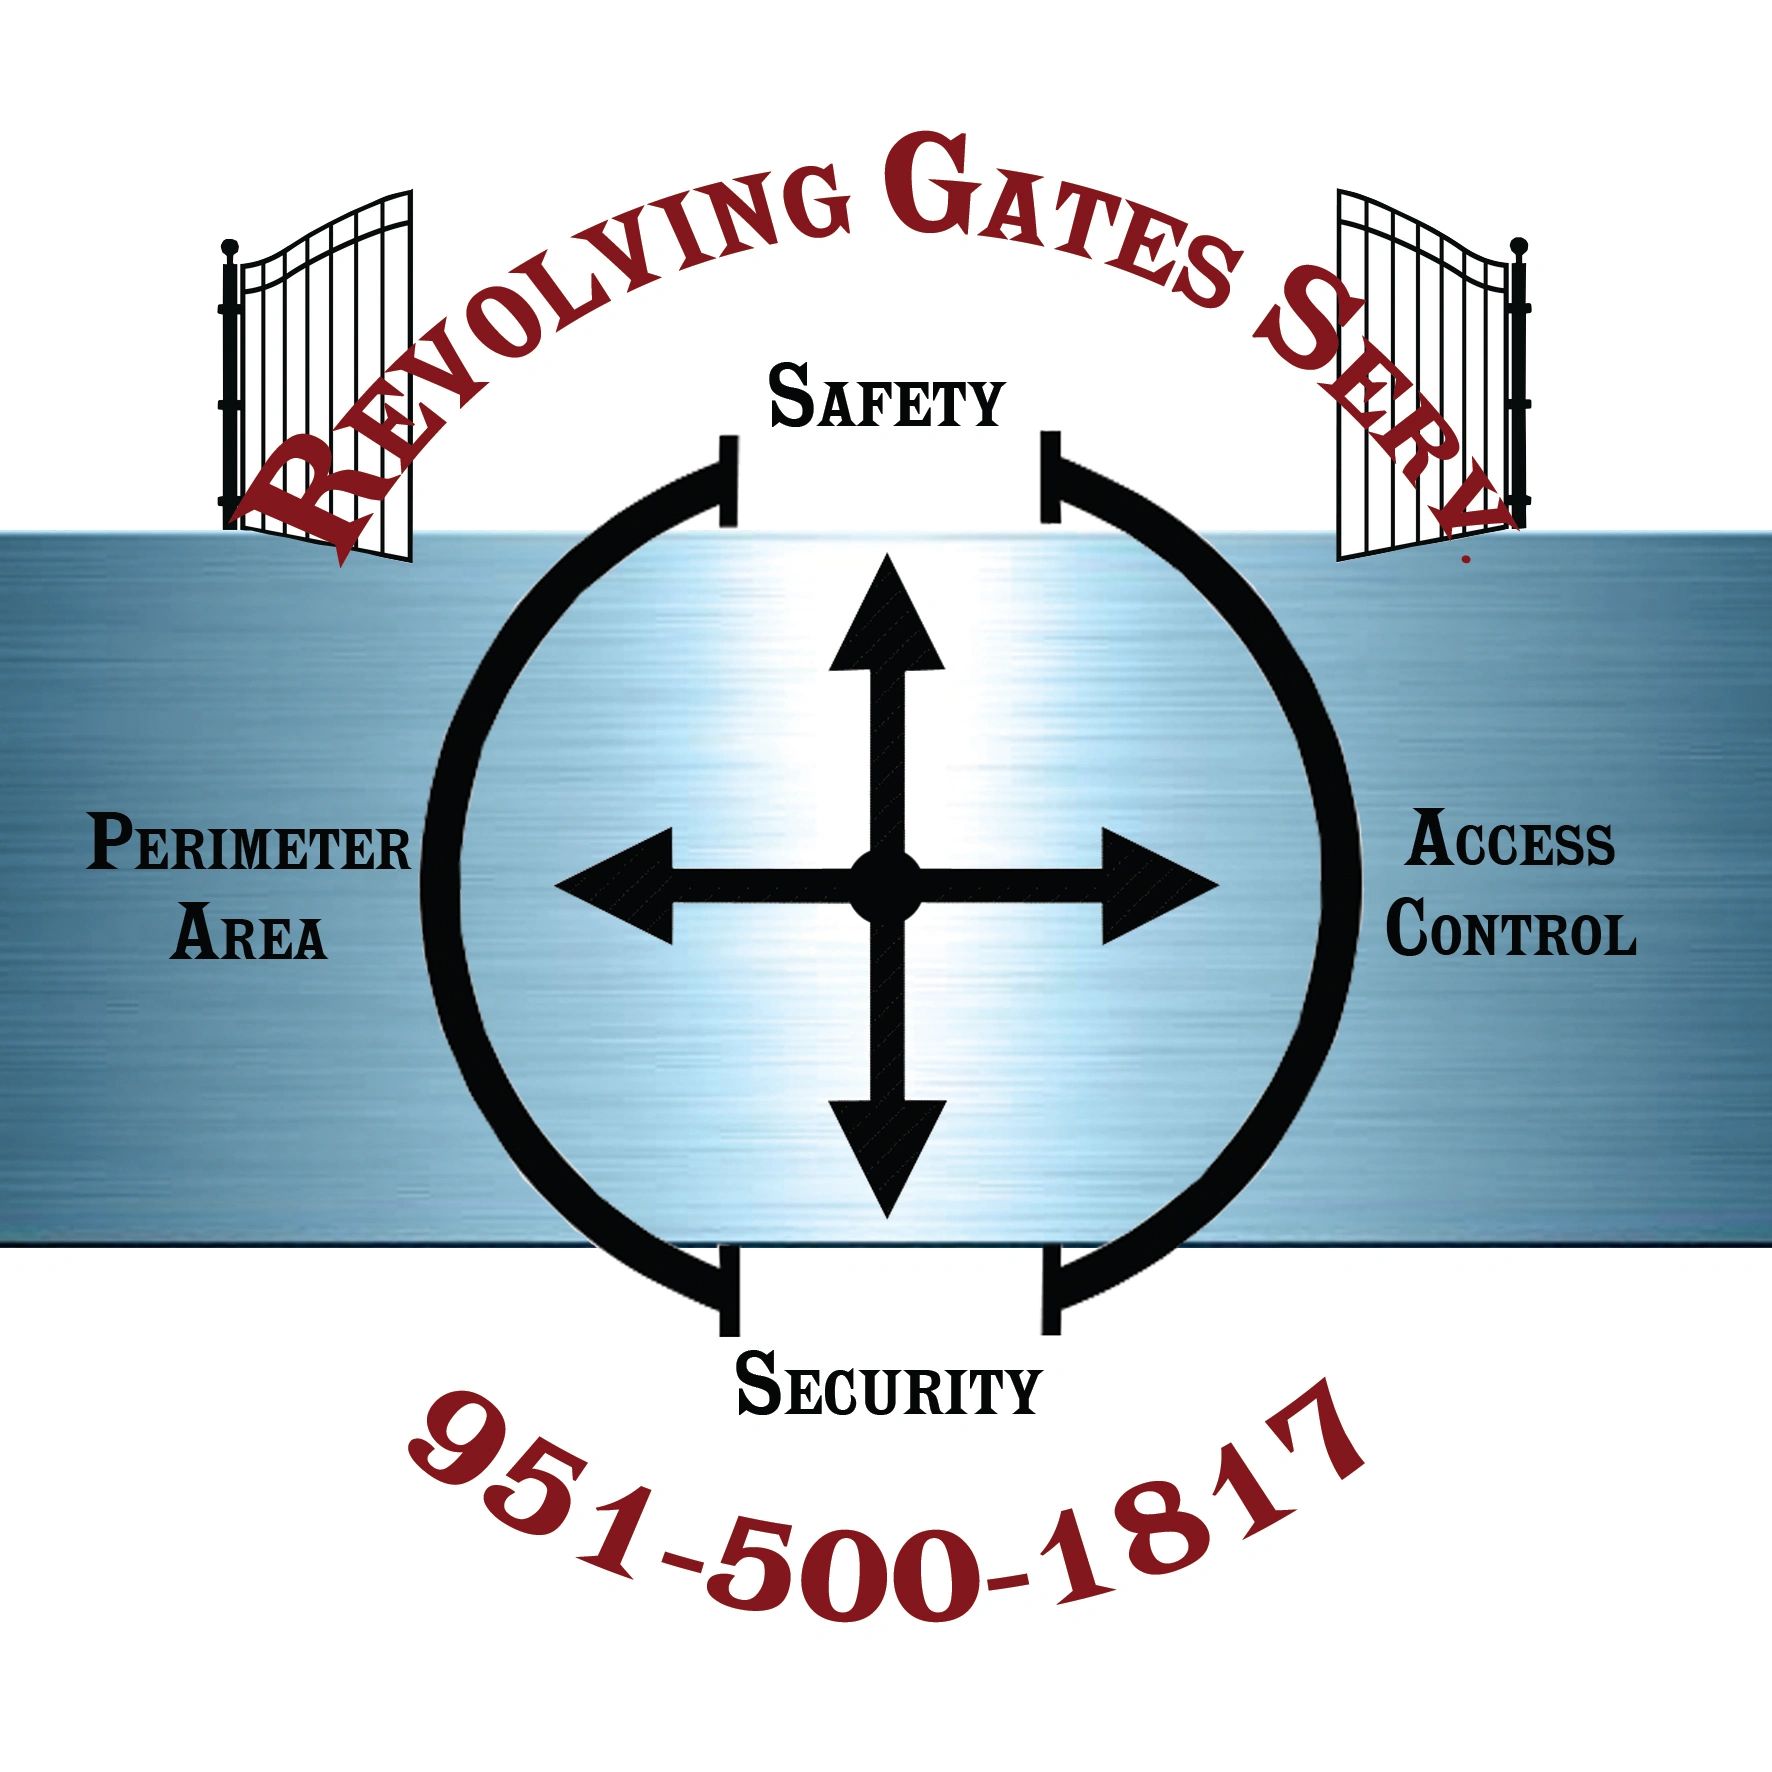 Revolving Gates Services